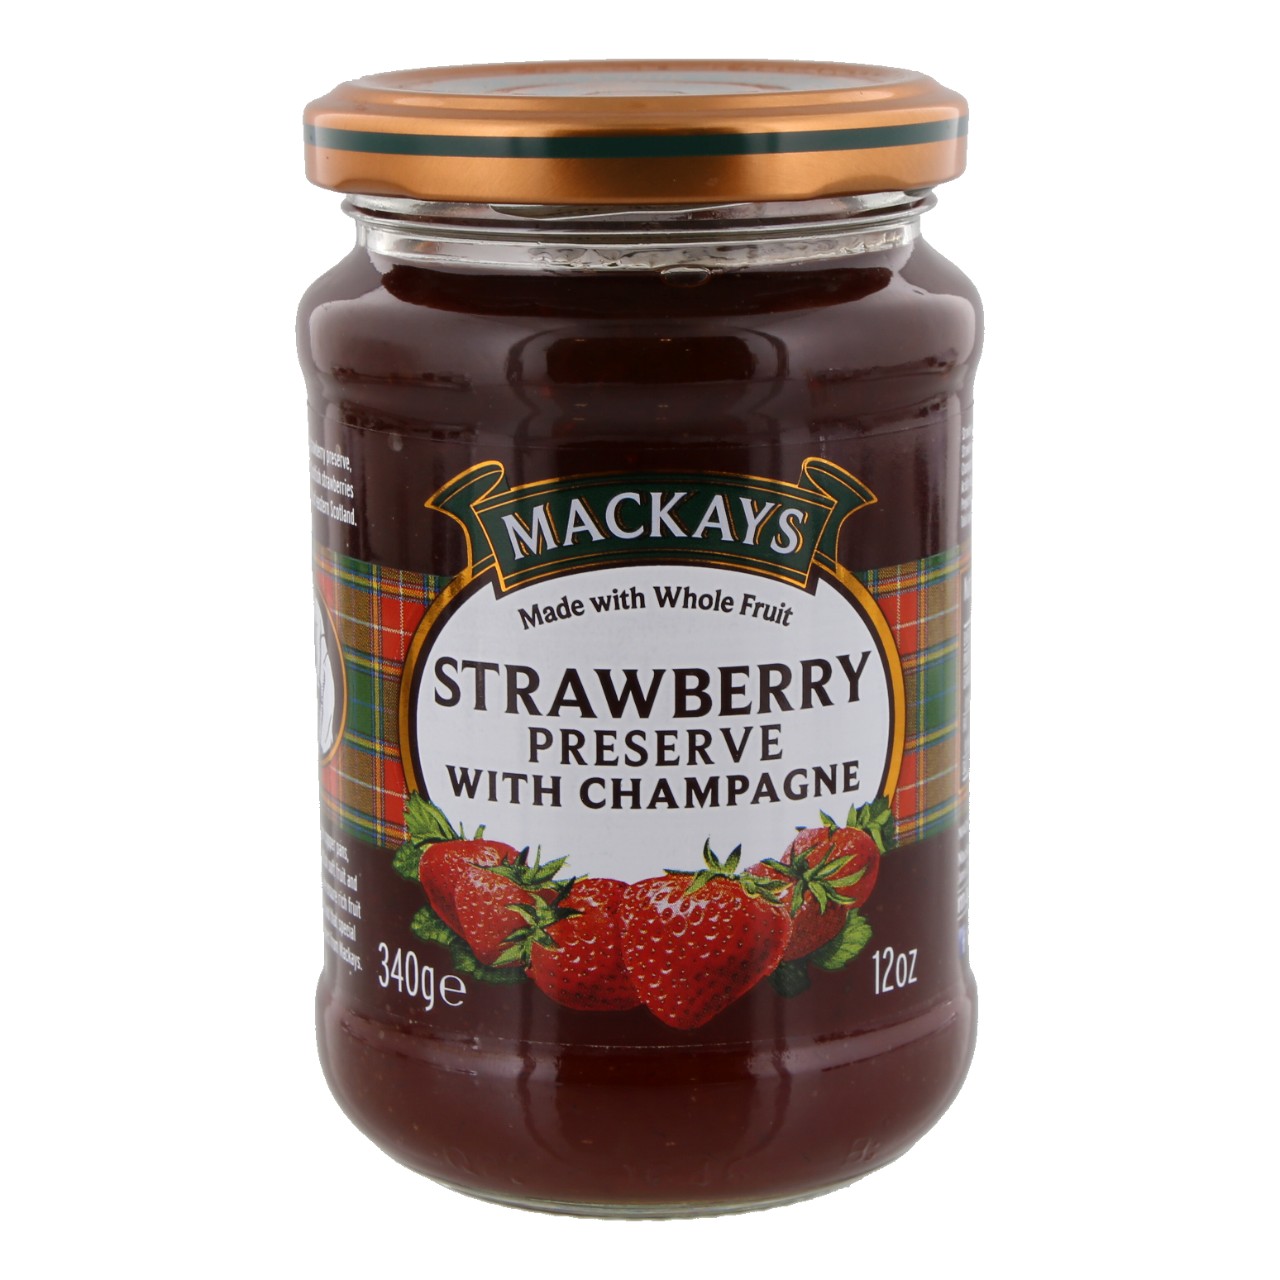 Strawberry preserve aardbei jam met champagne